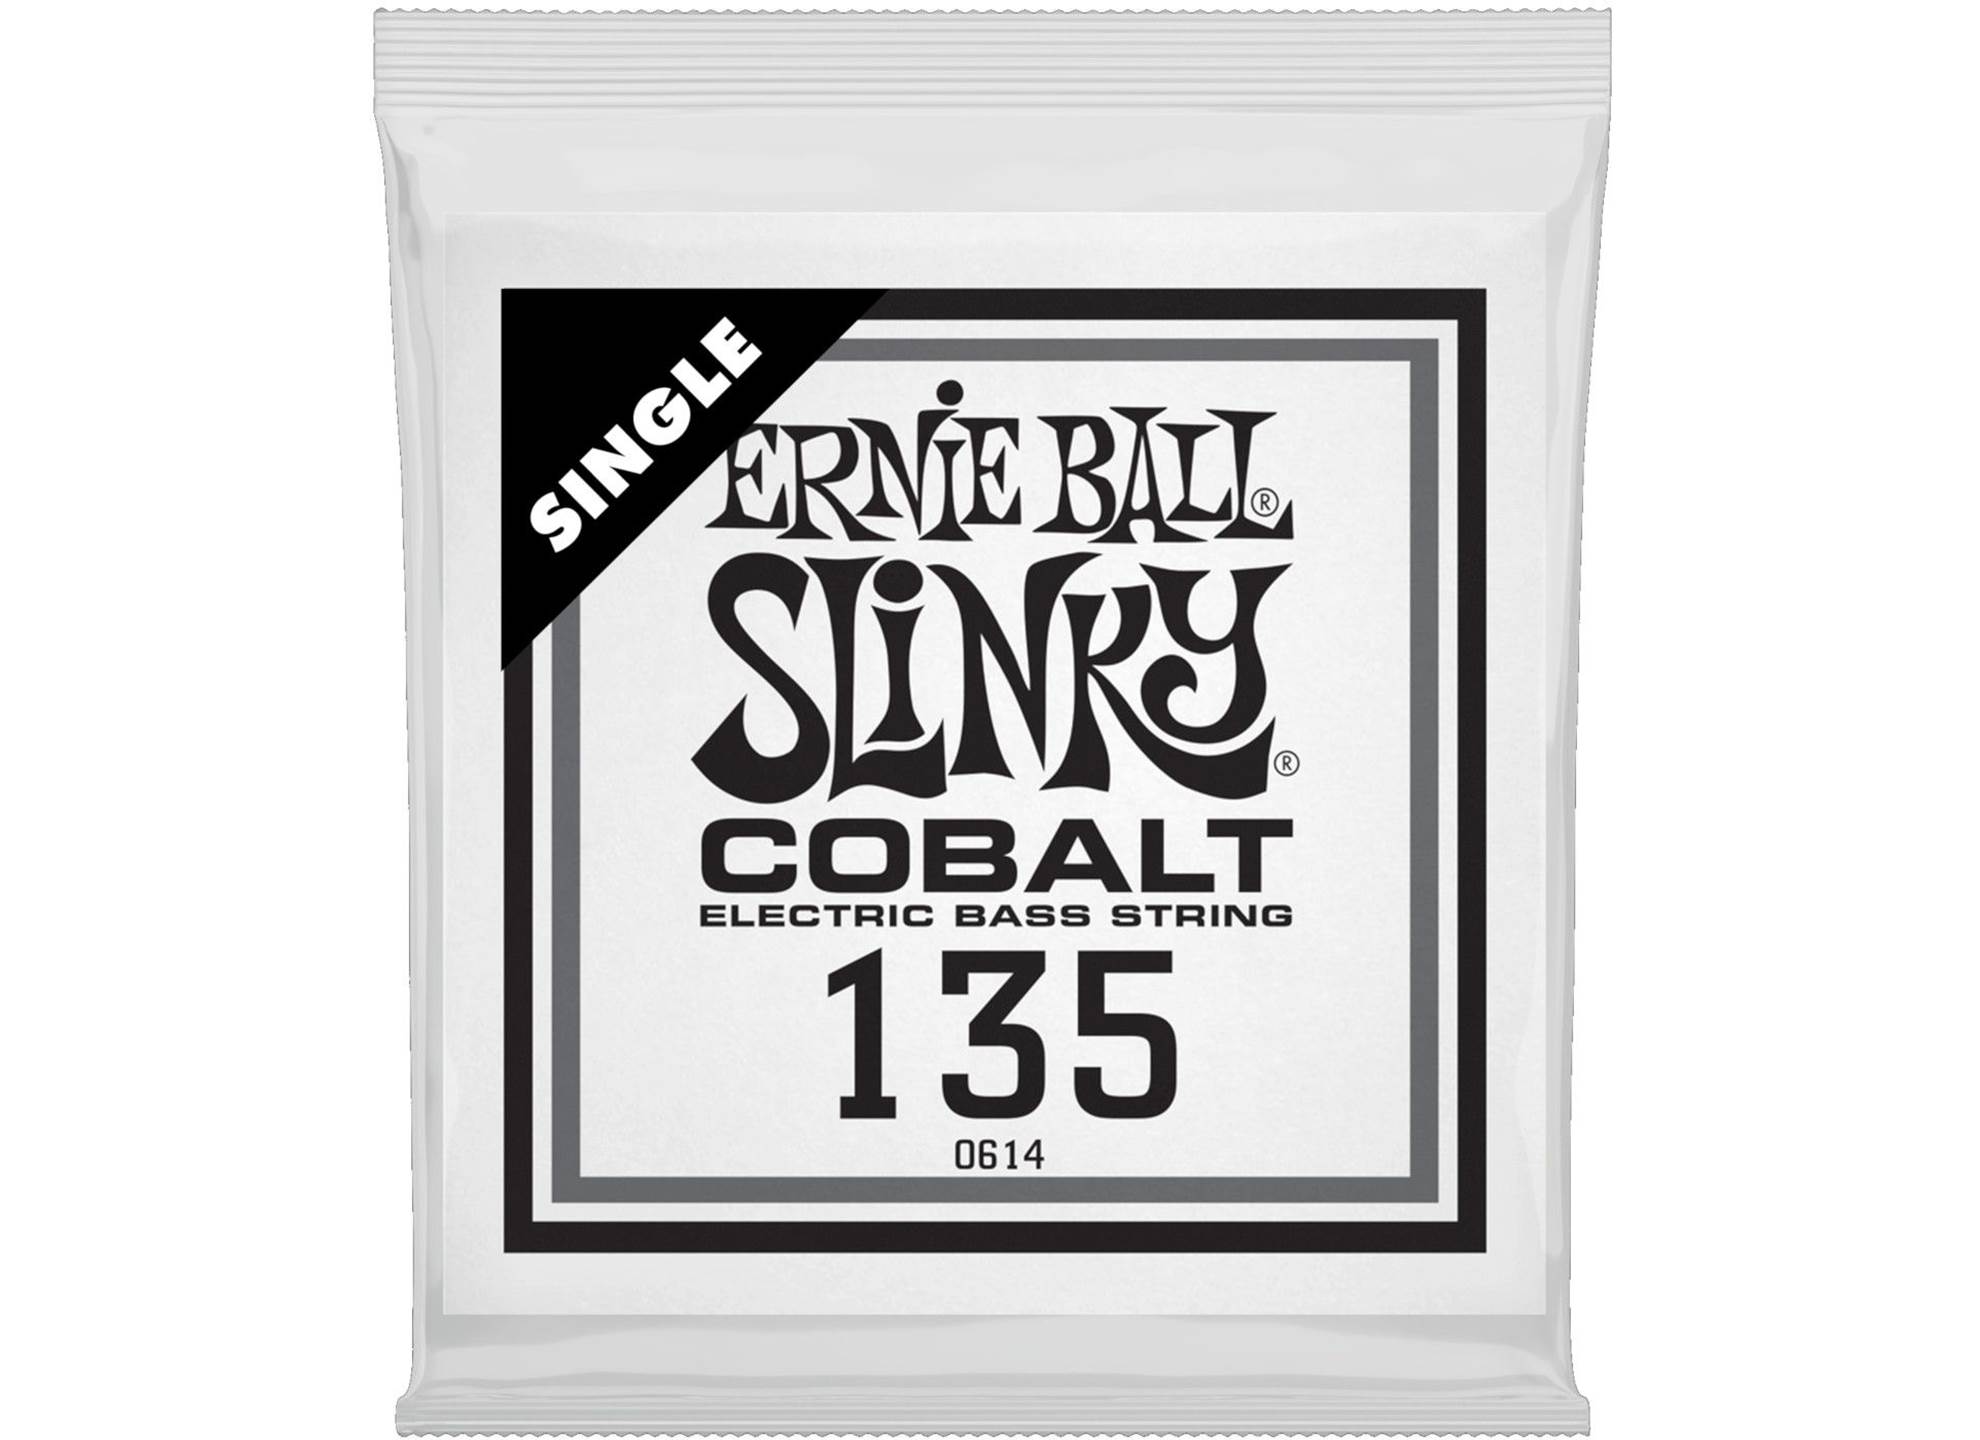 EB-10614 Single. 135 Cobalt Wound